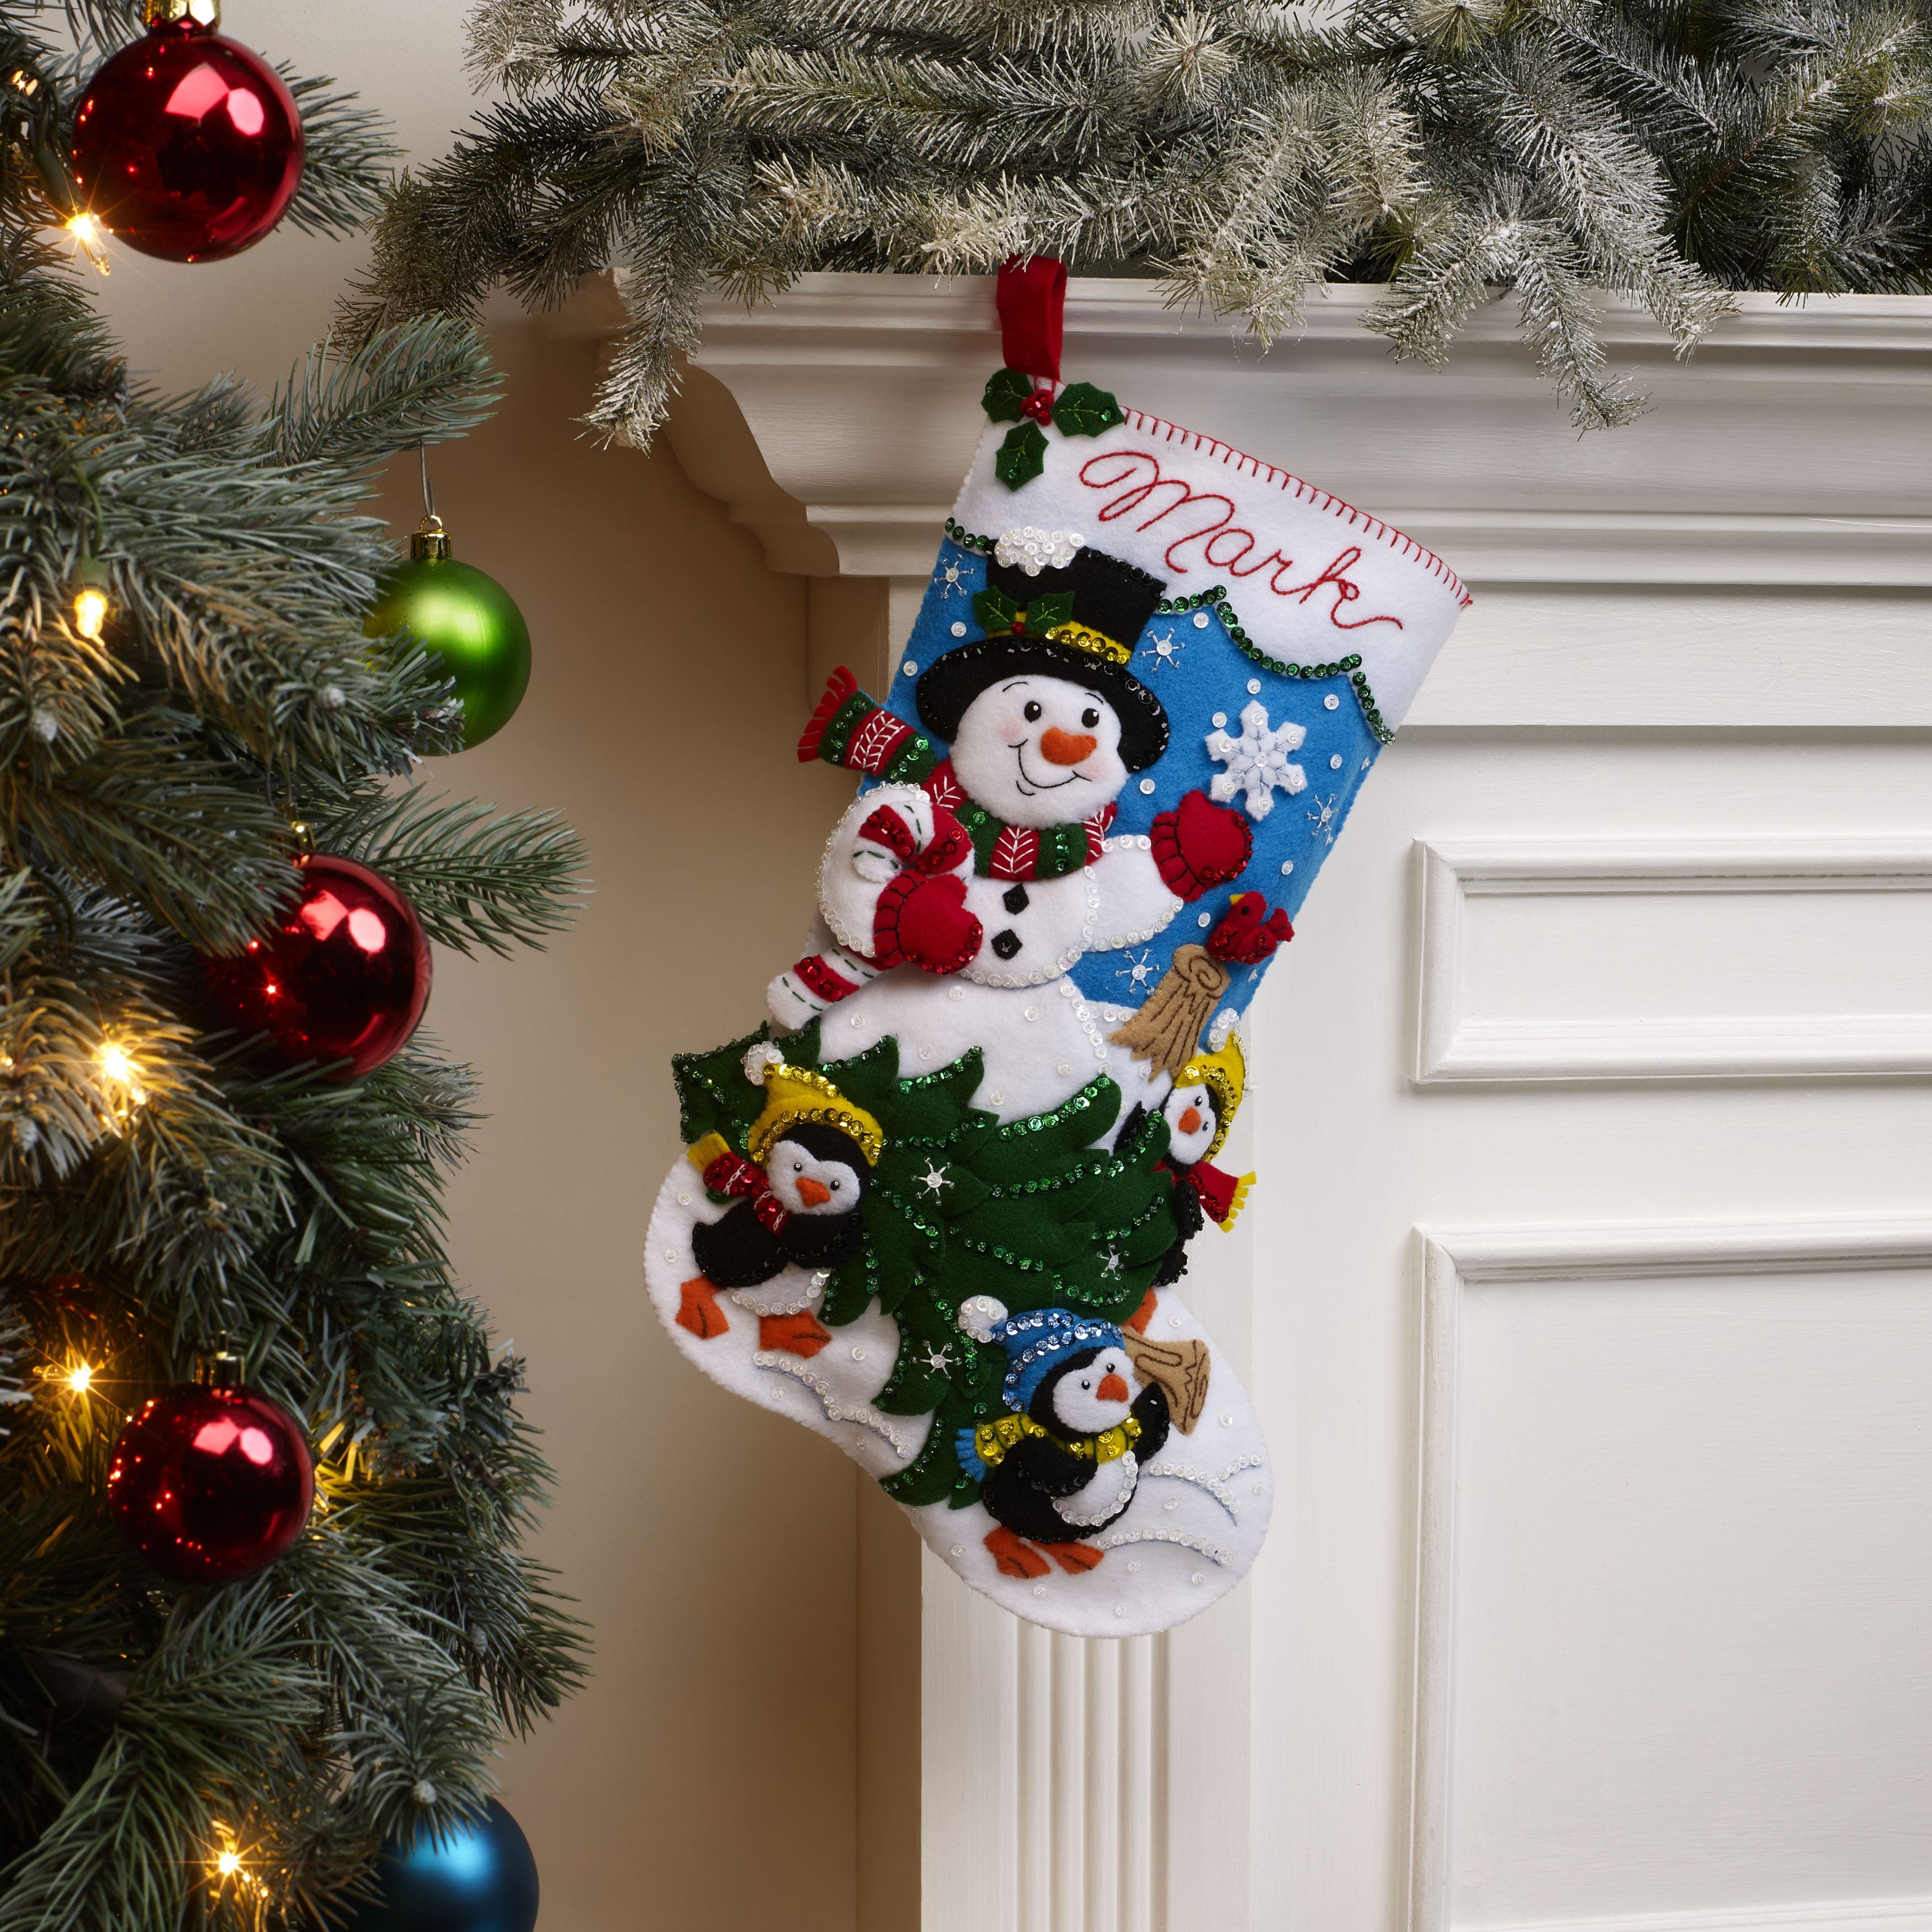 Felt Christmas Stockings Project